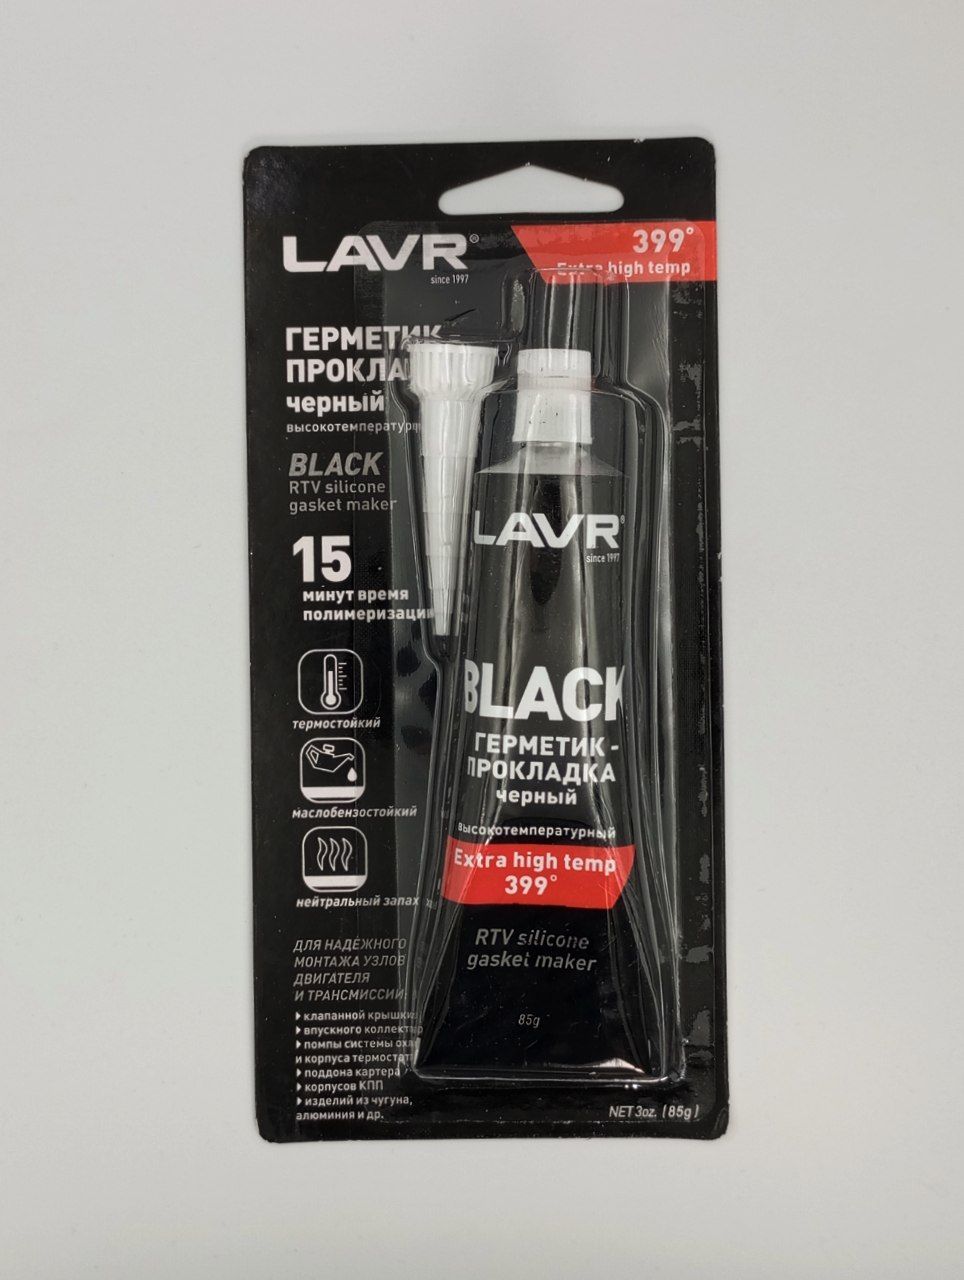 LAVR RTV Silicone Gasket Maker Black Герметик-прокладка высокотемпературный Черный 85 гр